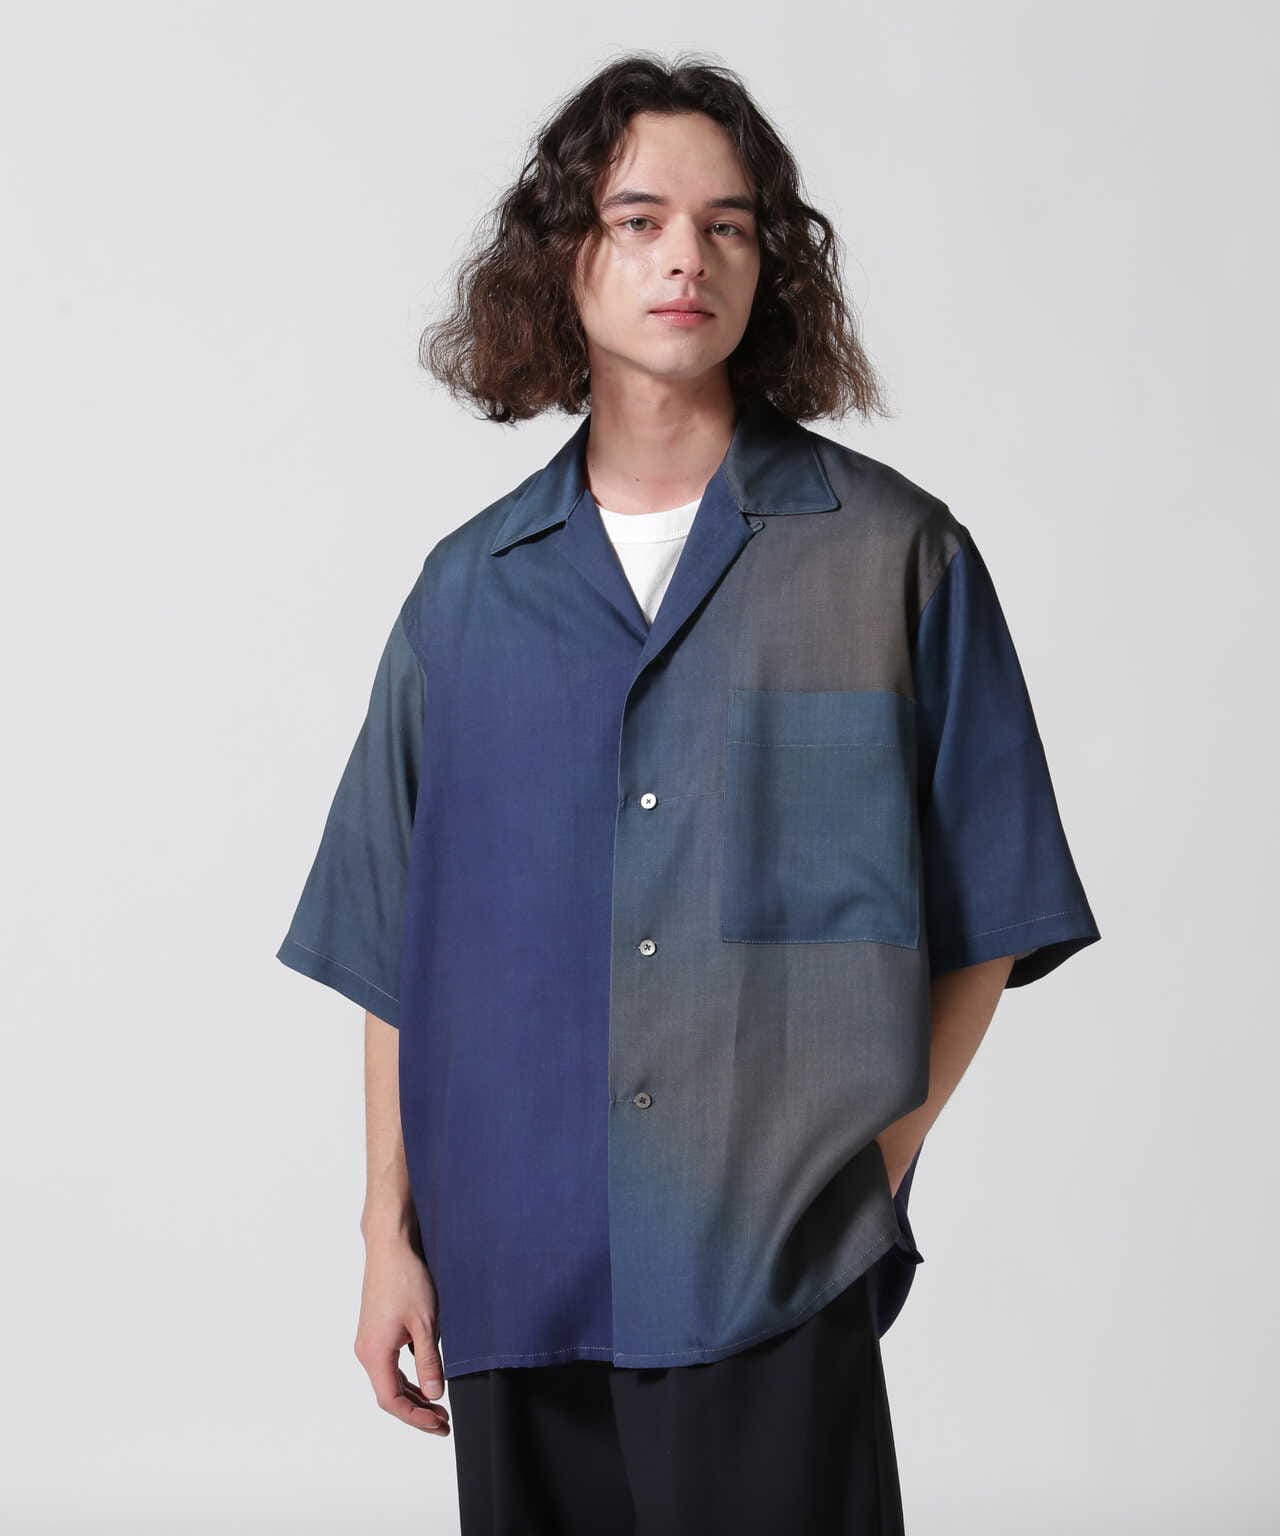 YOKE Printed Open Collar Shirt 23aw ヨーク